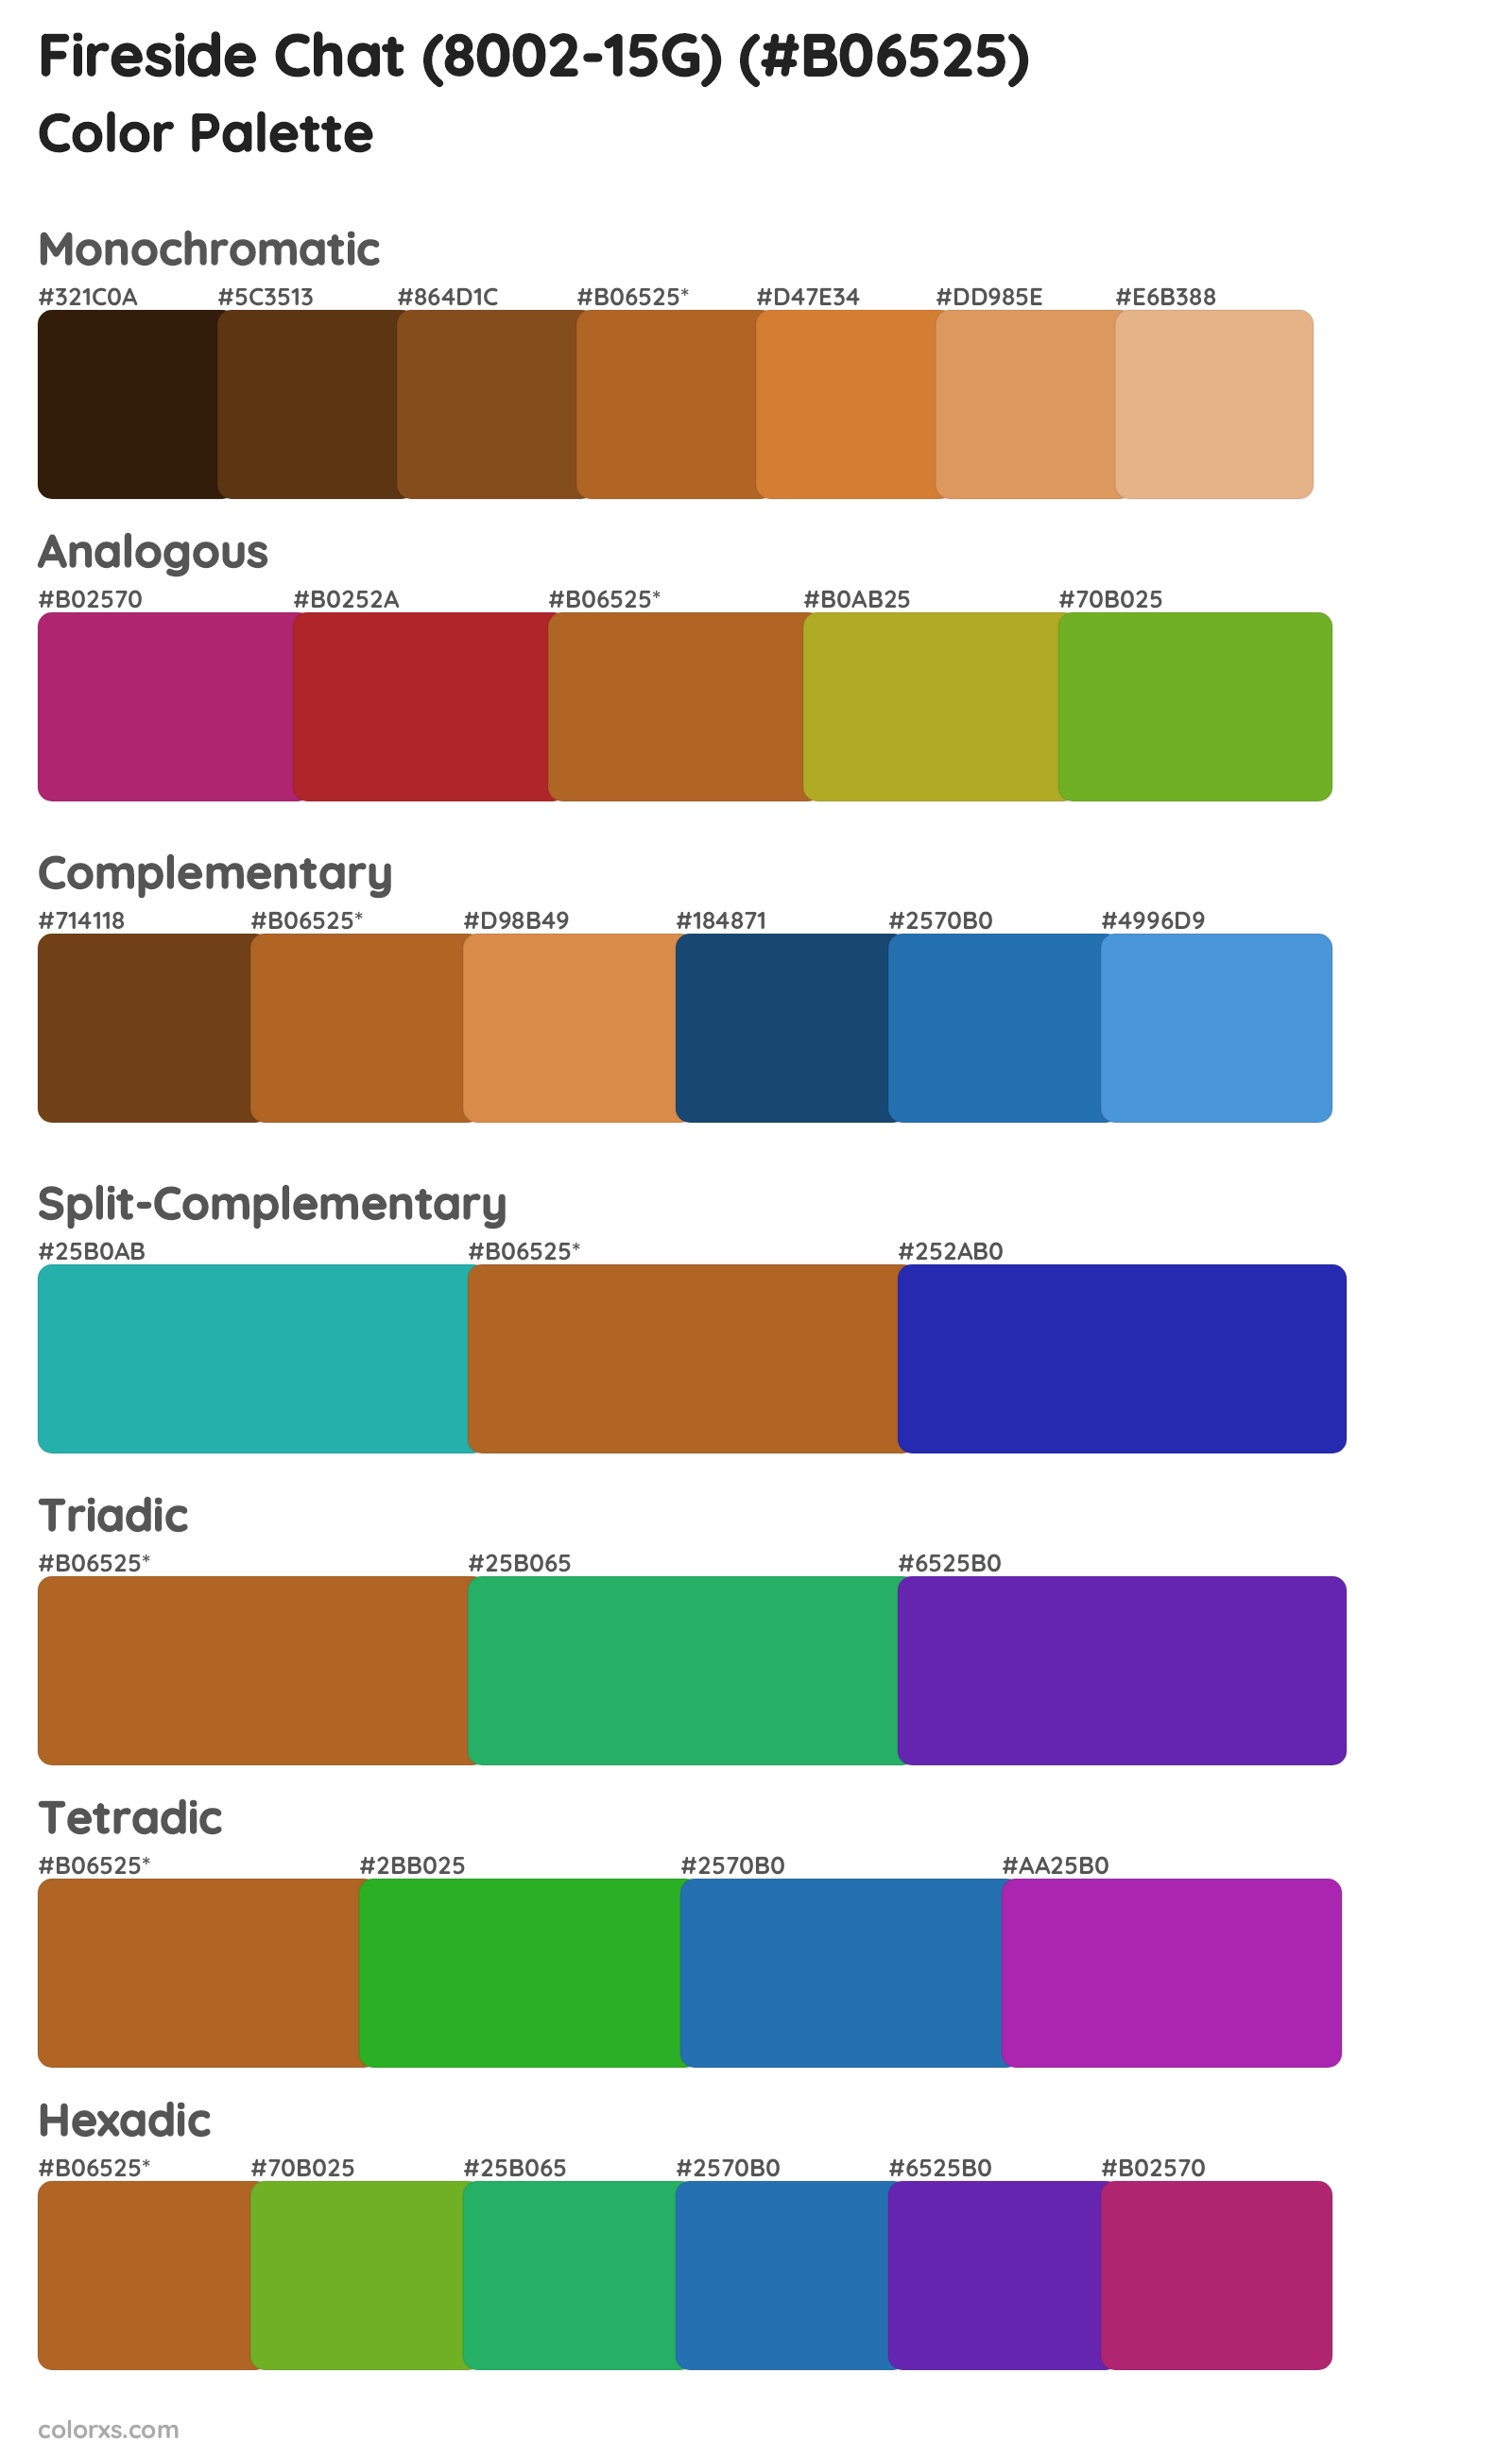 Fireside Chat (8002-15G) Color Scheme Palettes